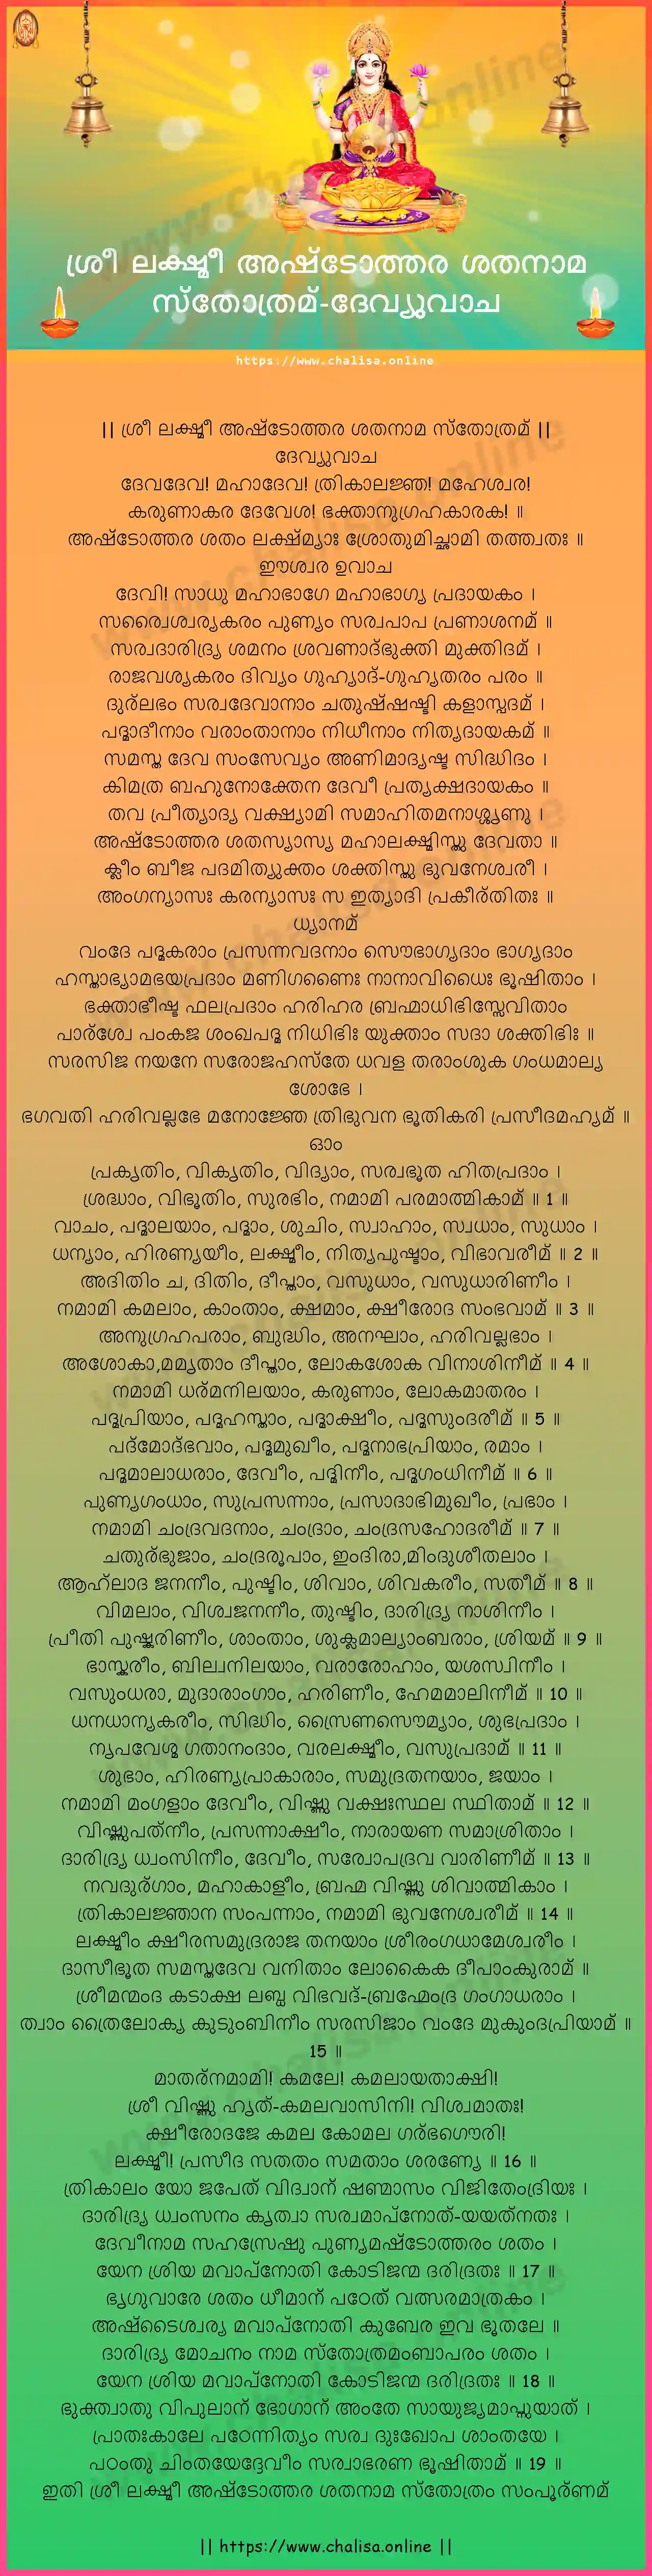 devyuvacha-sree-lakshmi-ashtottara-satanaama-stotram-malayalam-malayalam-lyrics-download